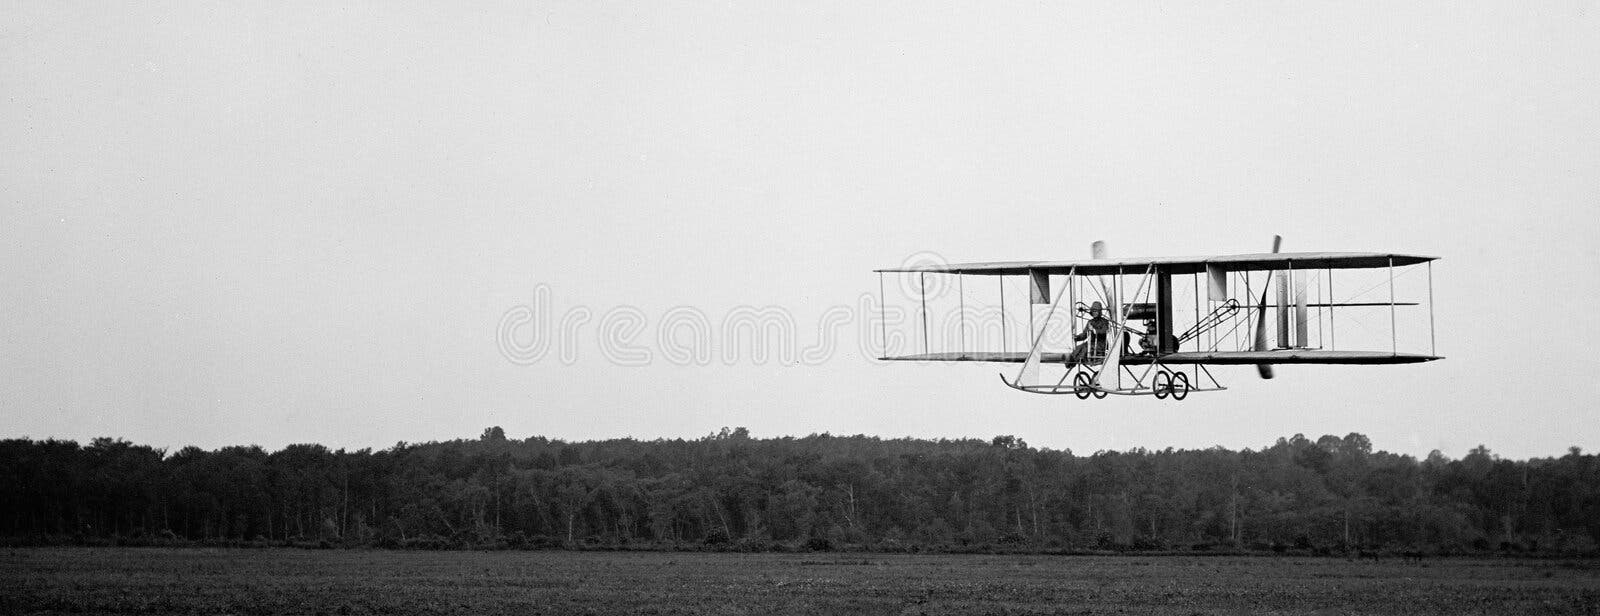 Wright brothers plane stock photos